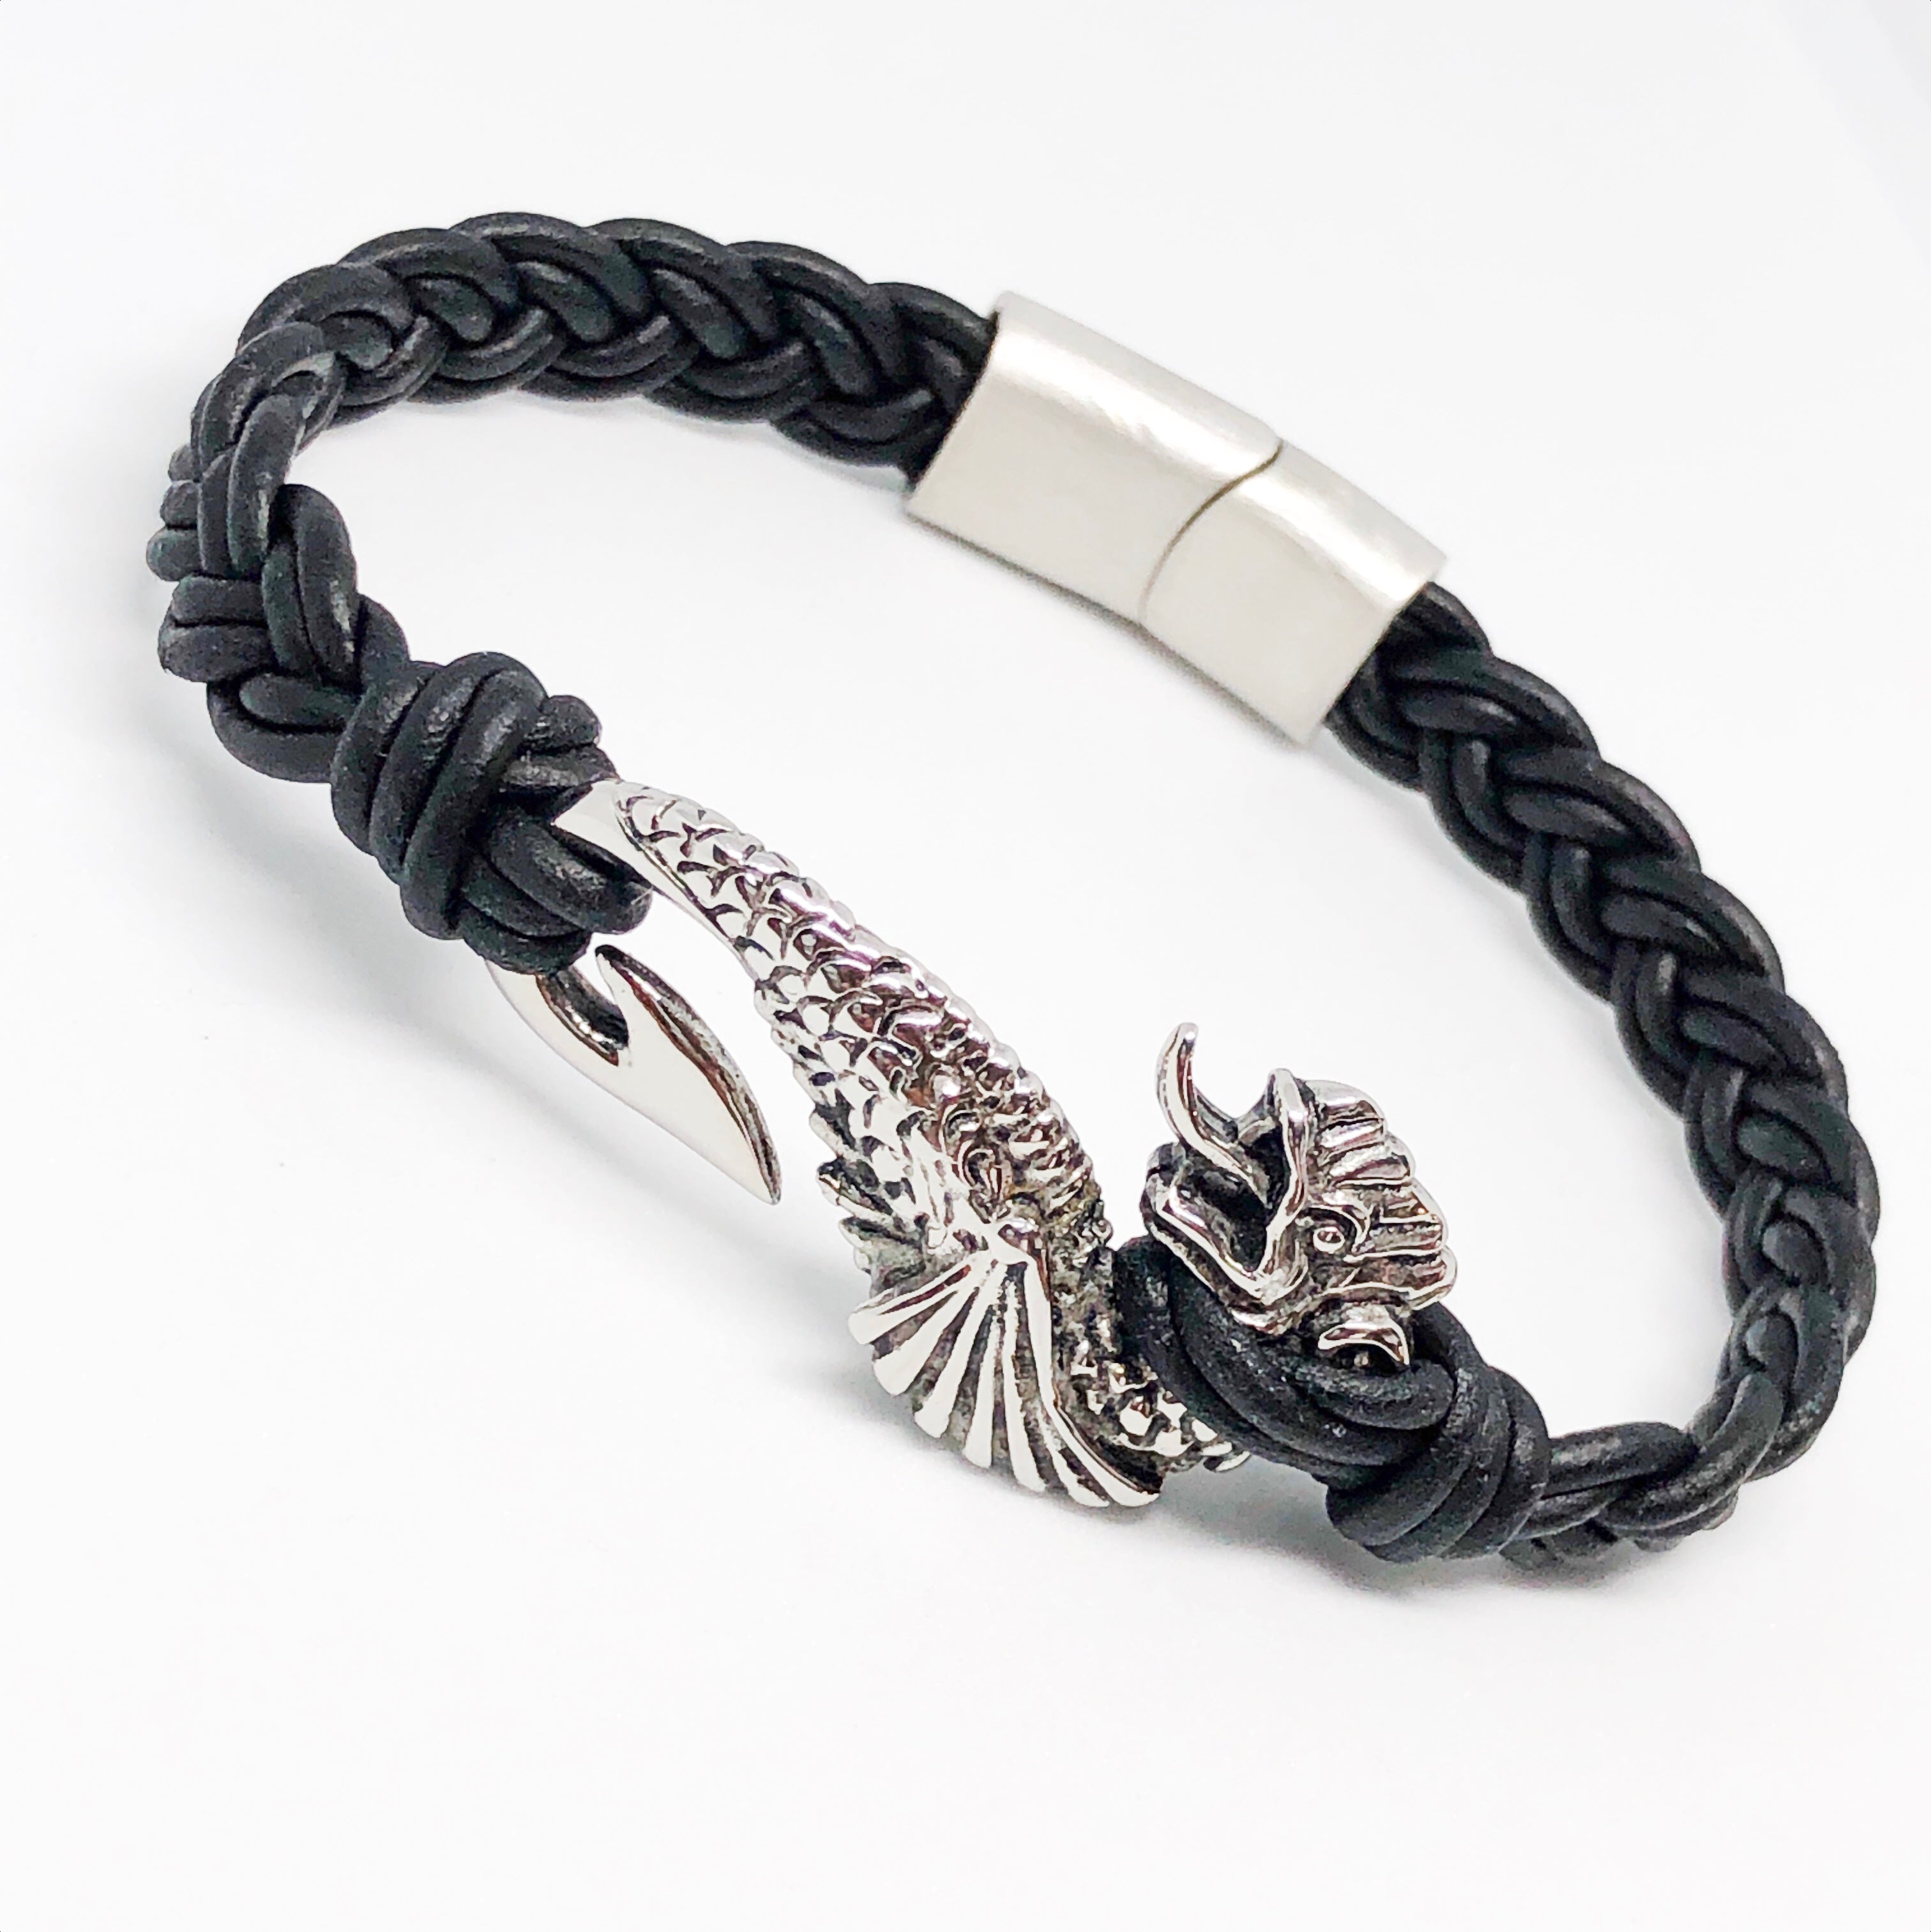 Maui Fish Hook Braided Leather Bracelet – Simple Natural Design